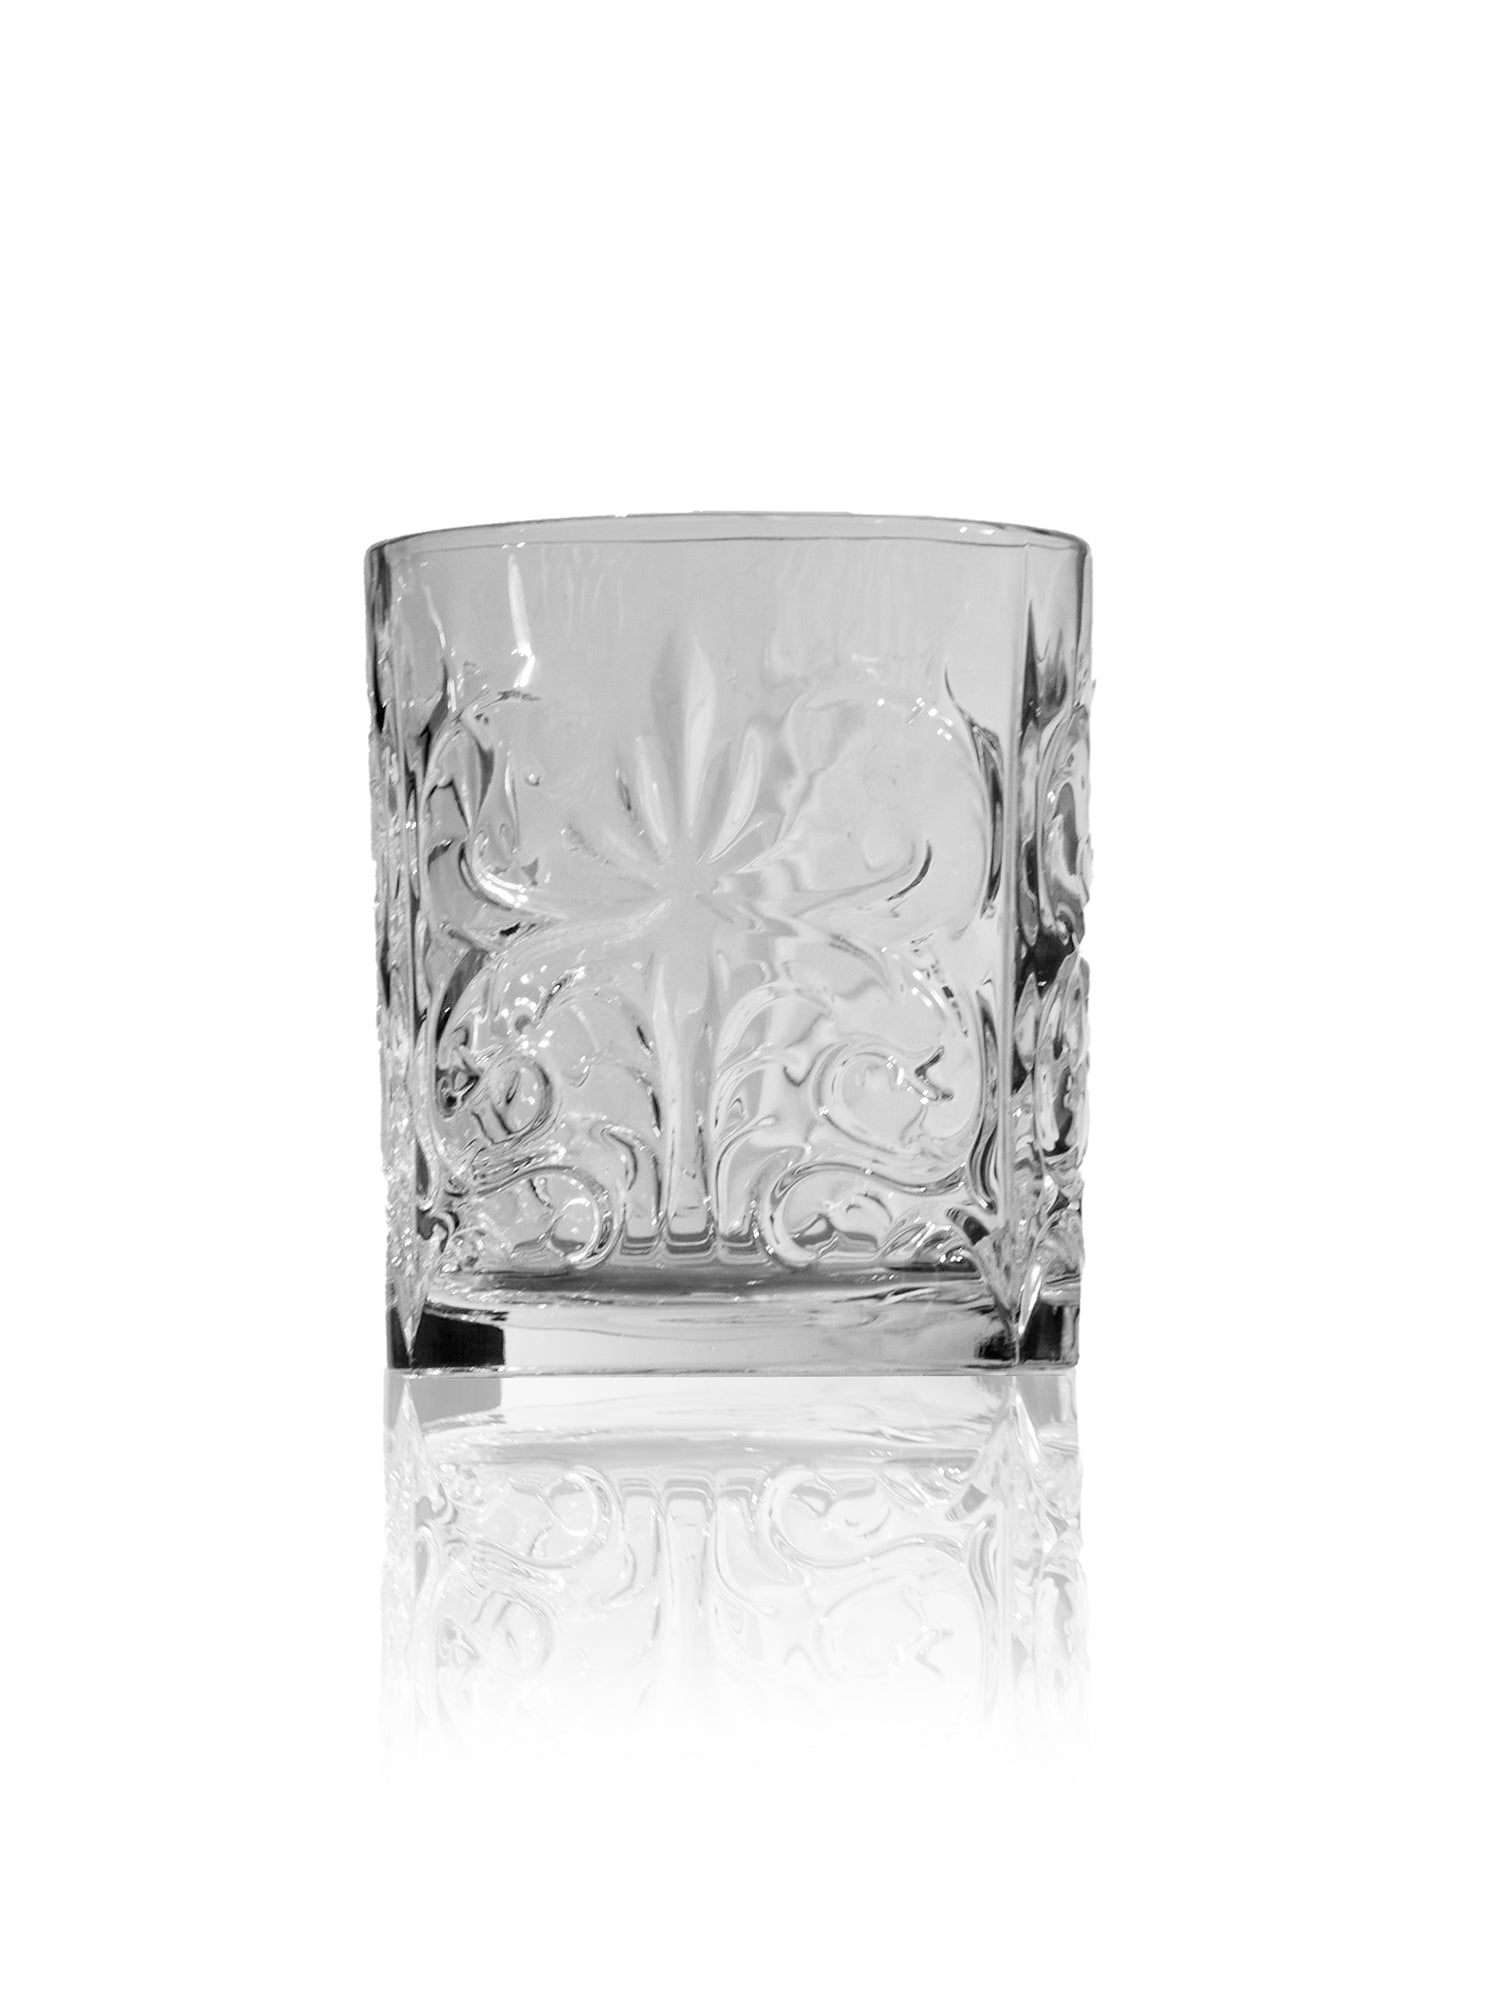 Premium Italian Crystal Whiskey Glasses - Set of 6